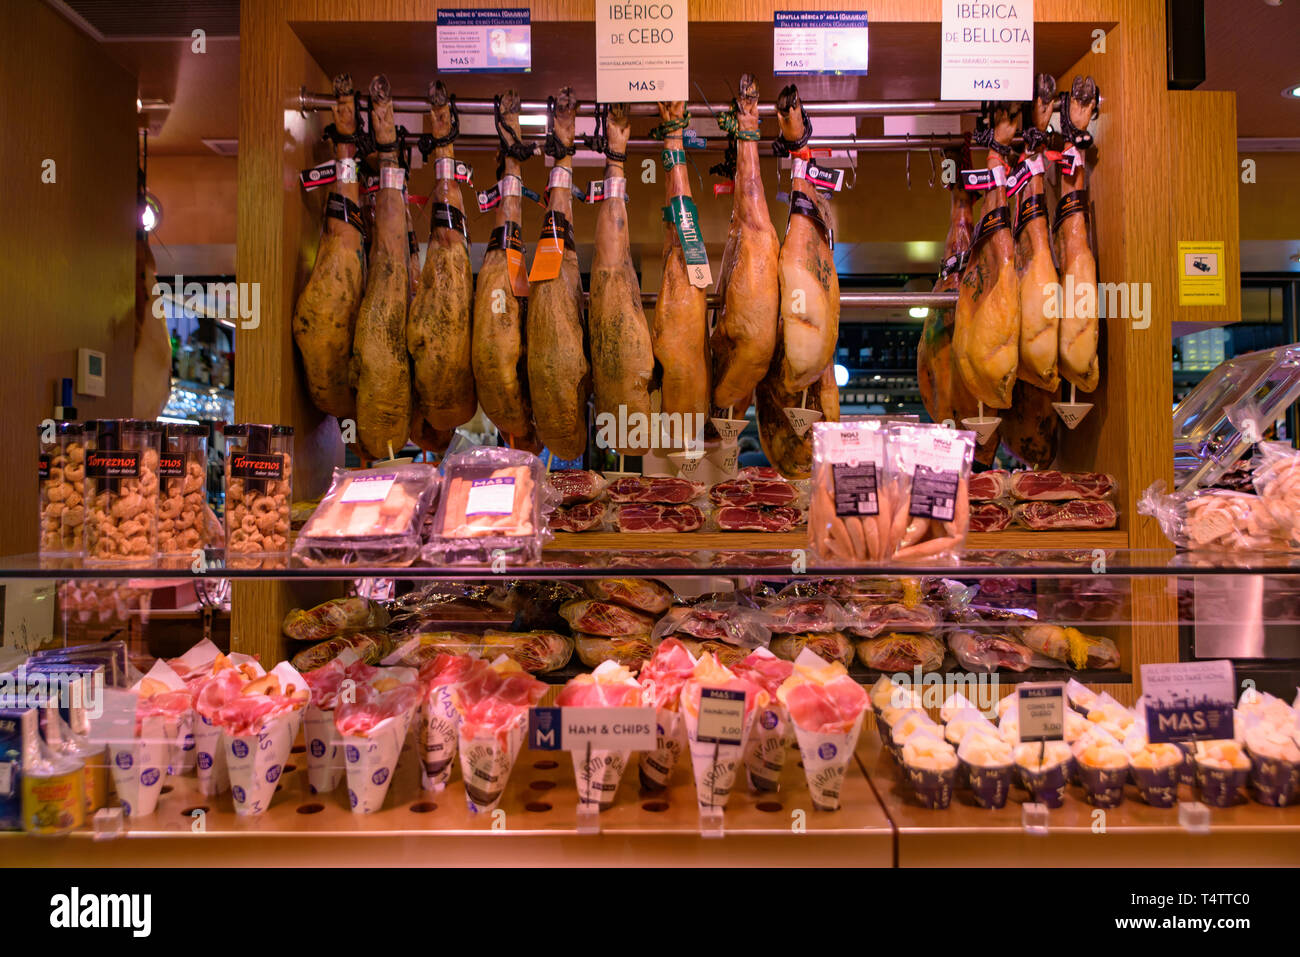 Les étals de vente Jamón Serrano, le jambon espagnol salés à sec fait avec les porcs ibériques, à Barcelone, Espagne Banque D'Images